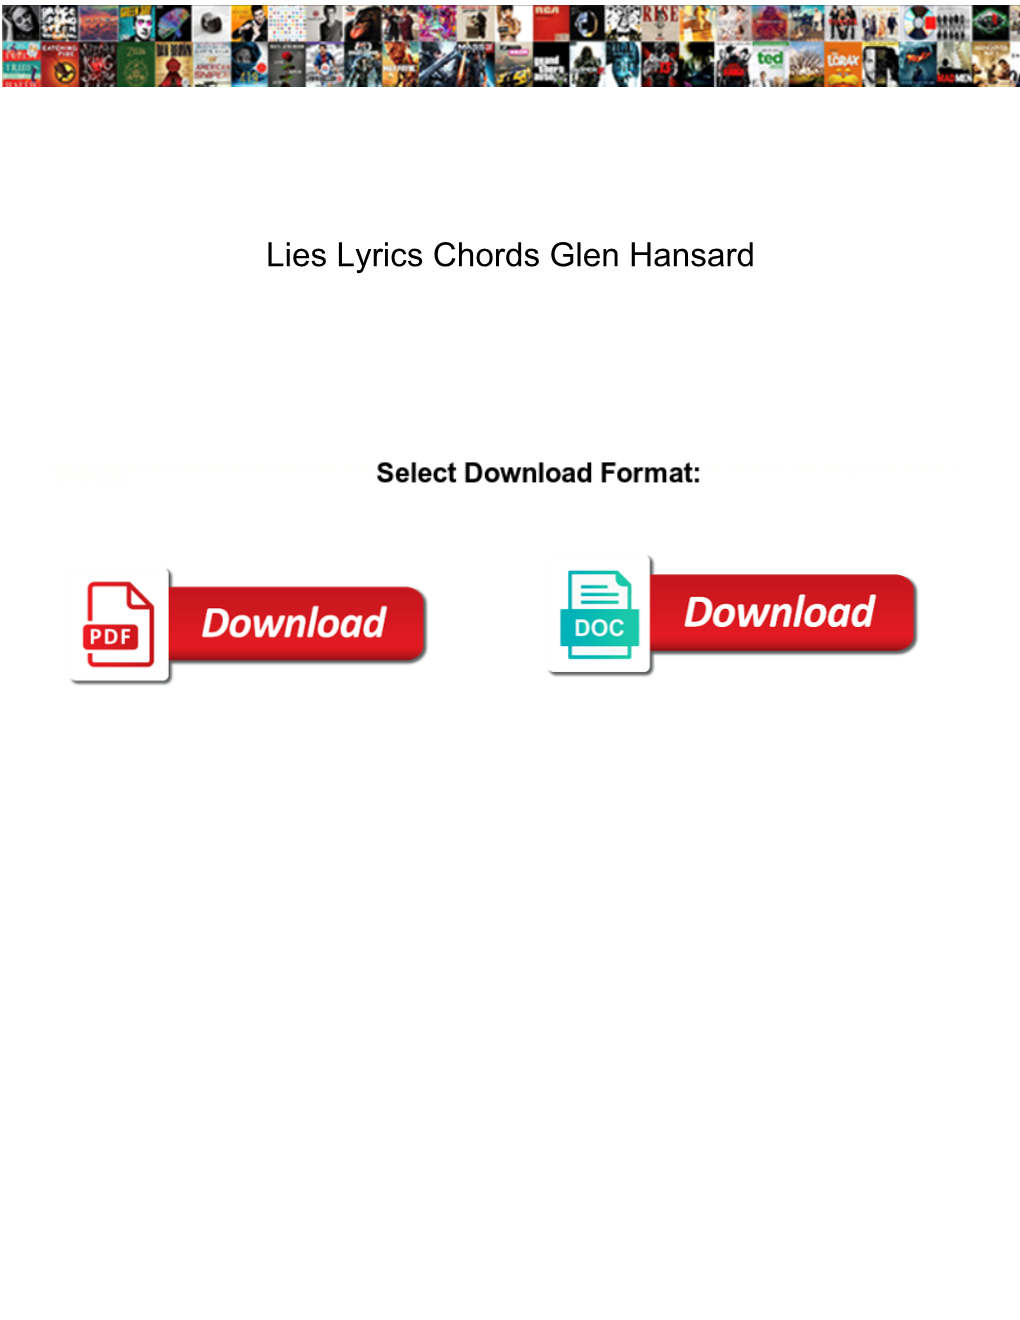 Lies Lyrics Chords Glen Hansard